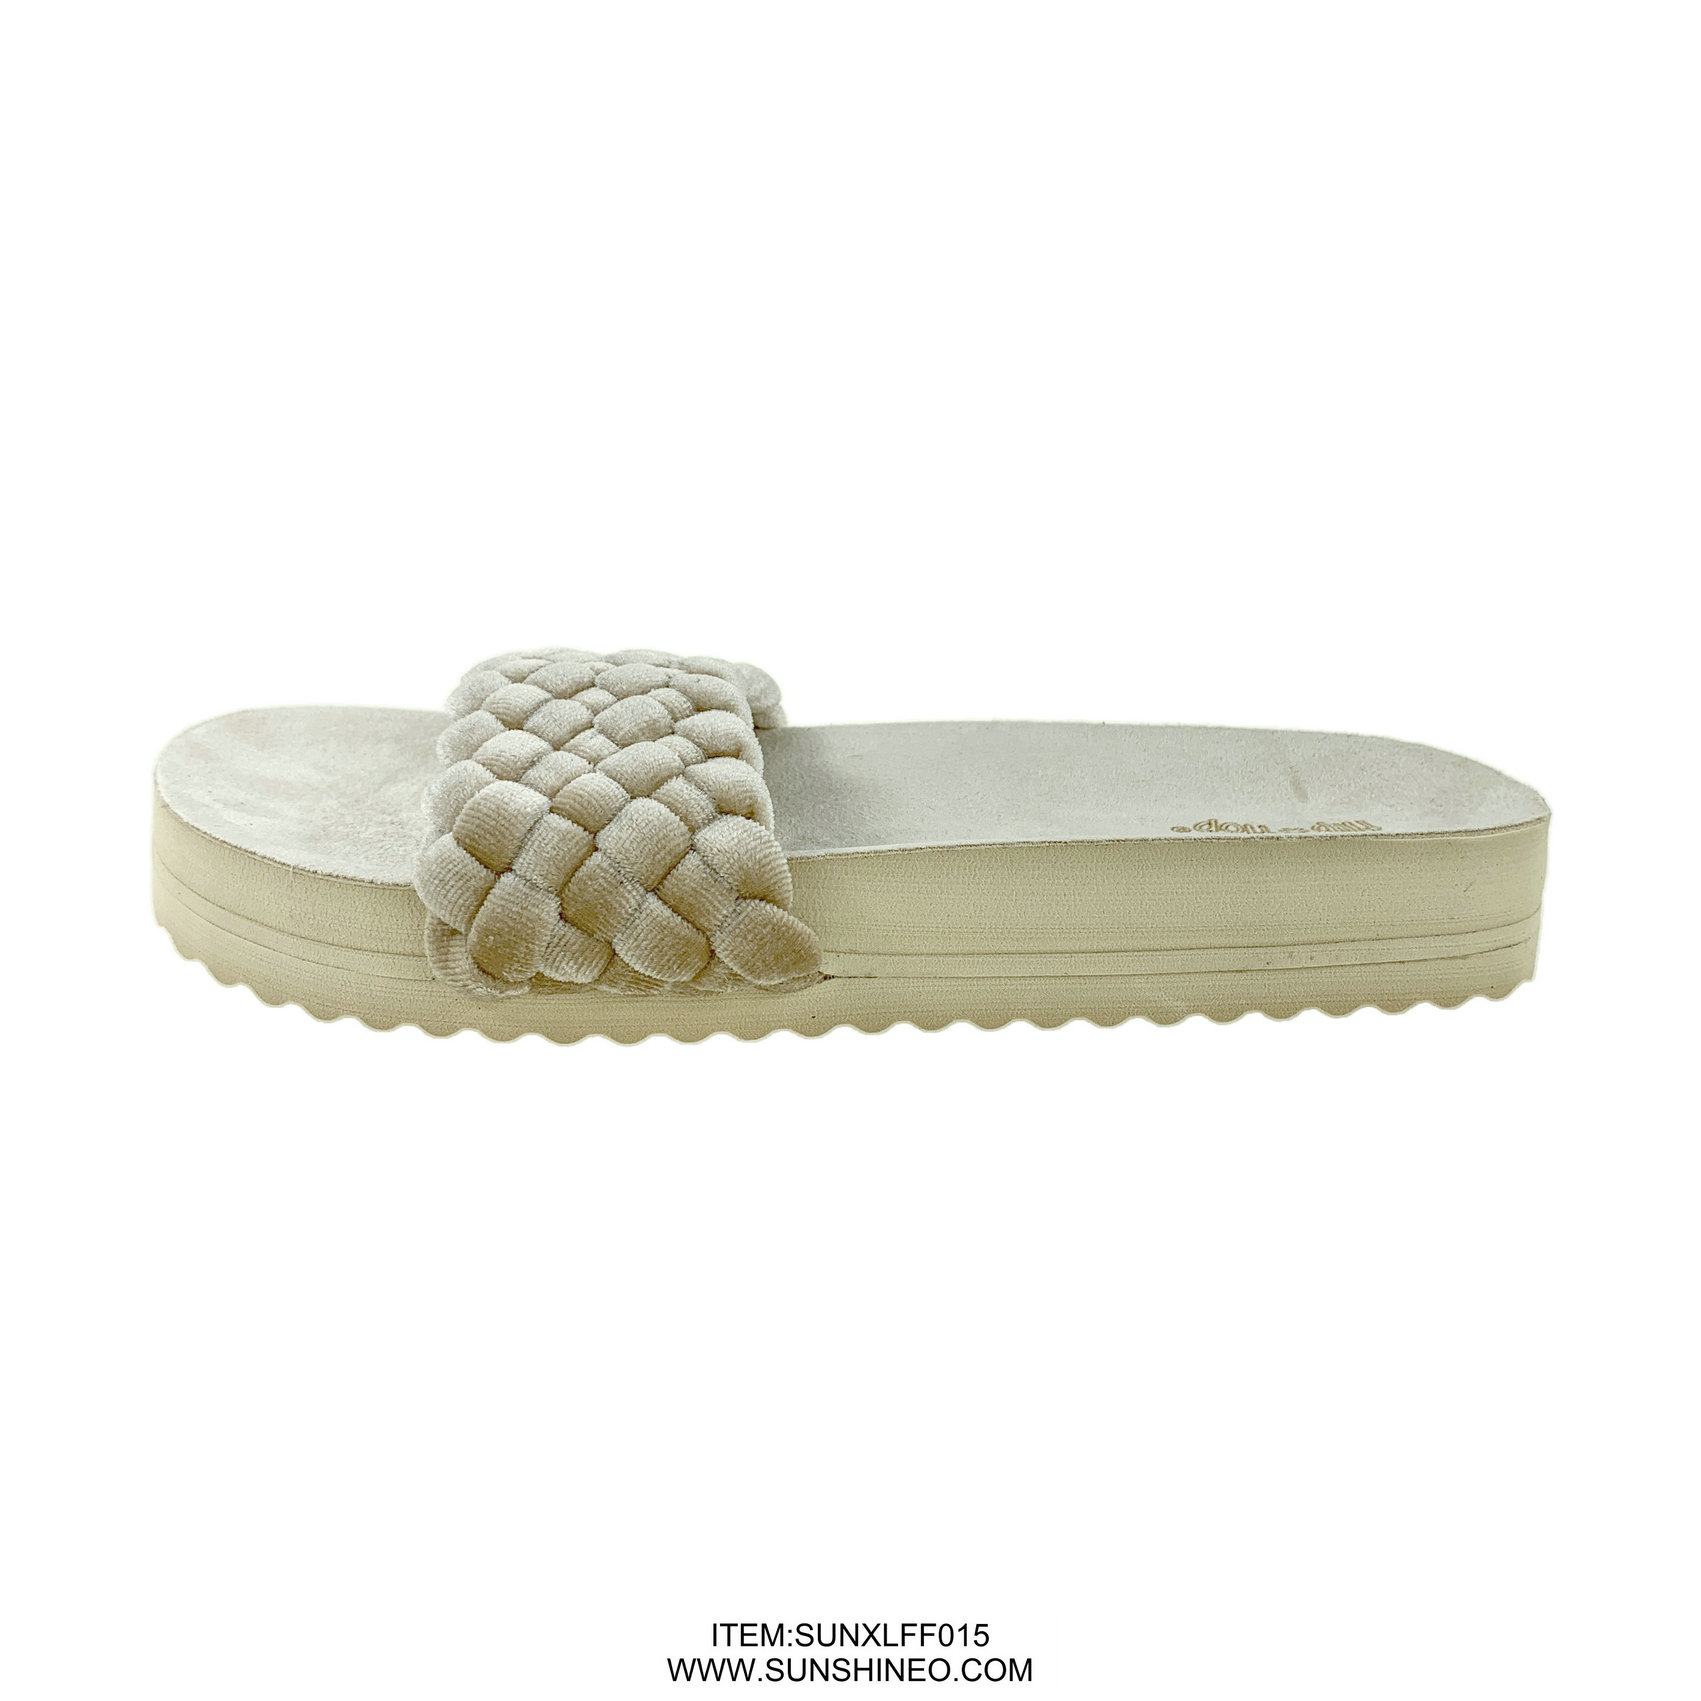 SUNXLFF015 fur flip flop sandals winter slippers